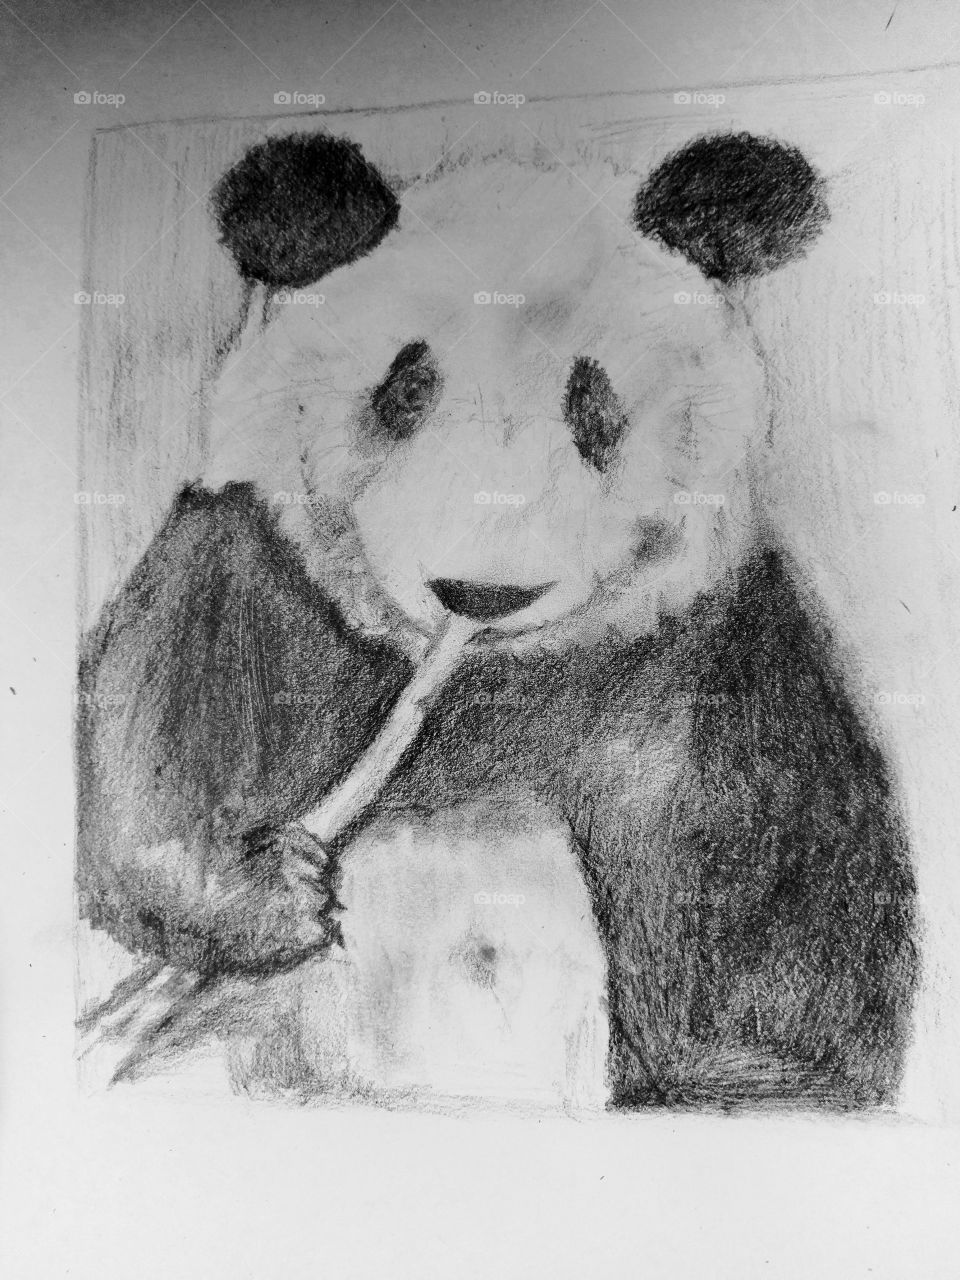 My drawing of a panda 